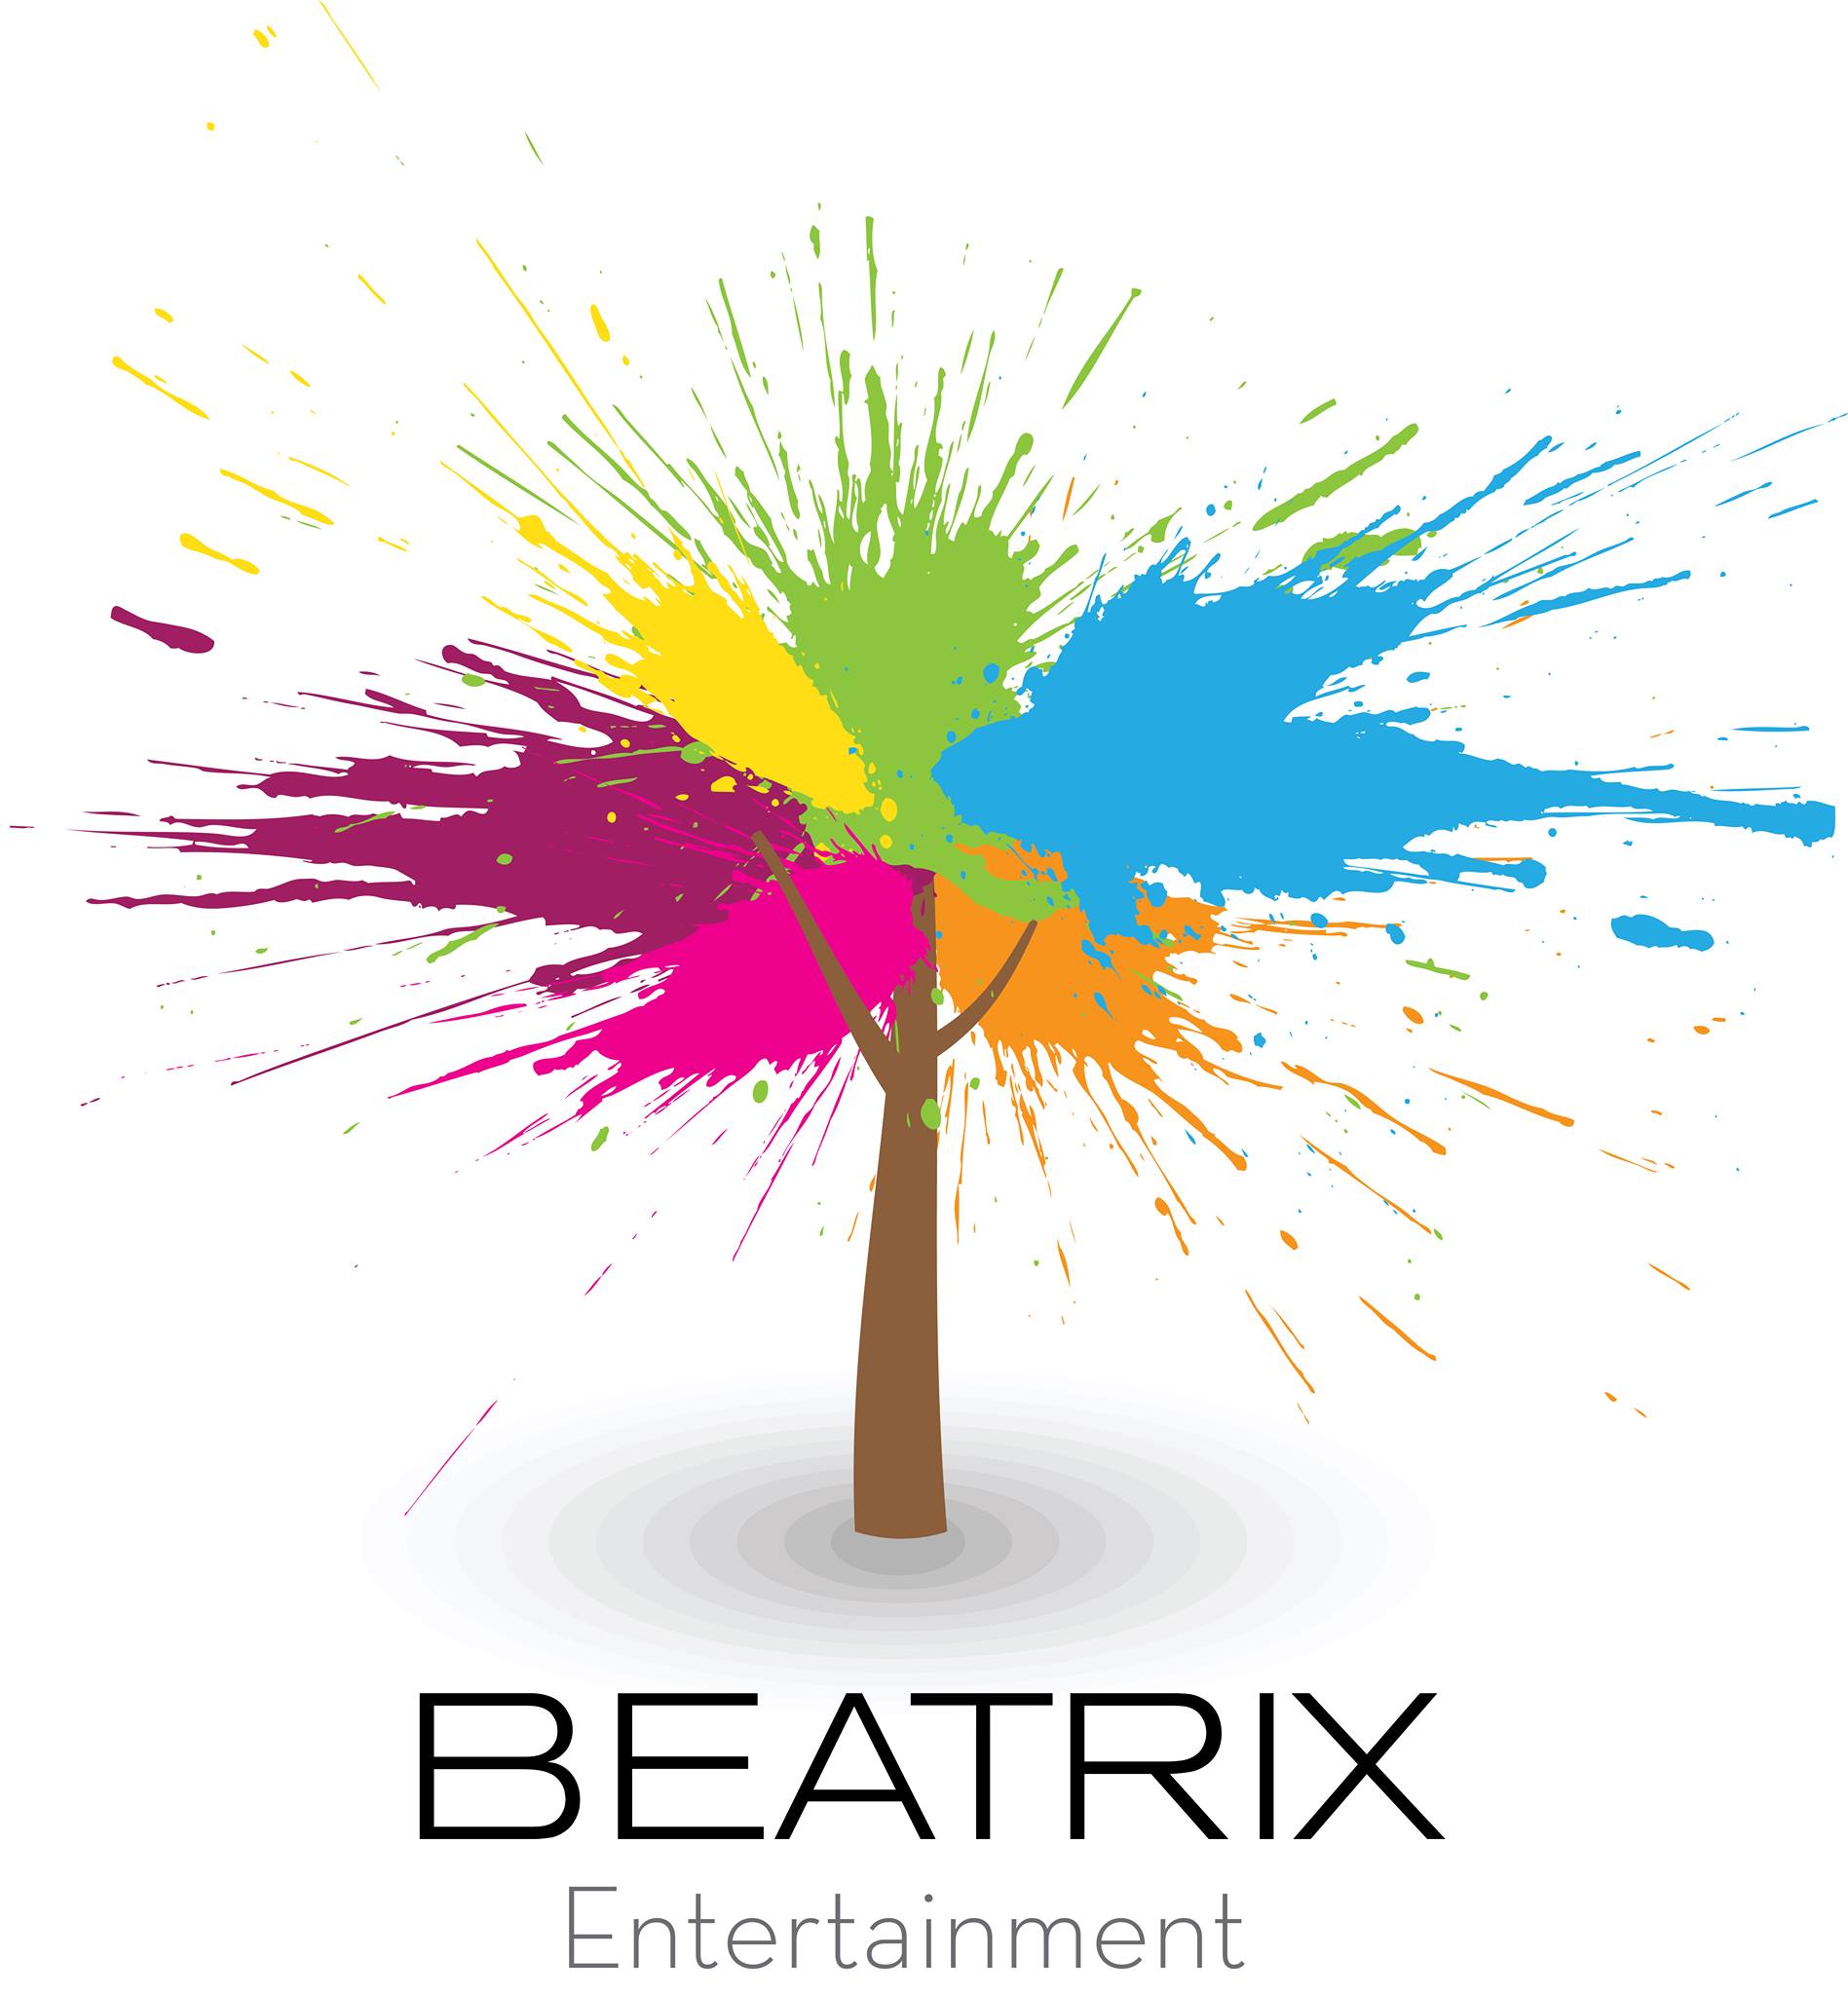 Beatrix Entertainment